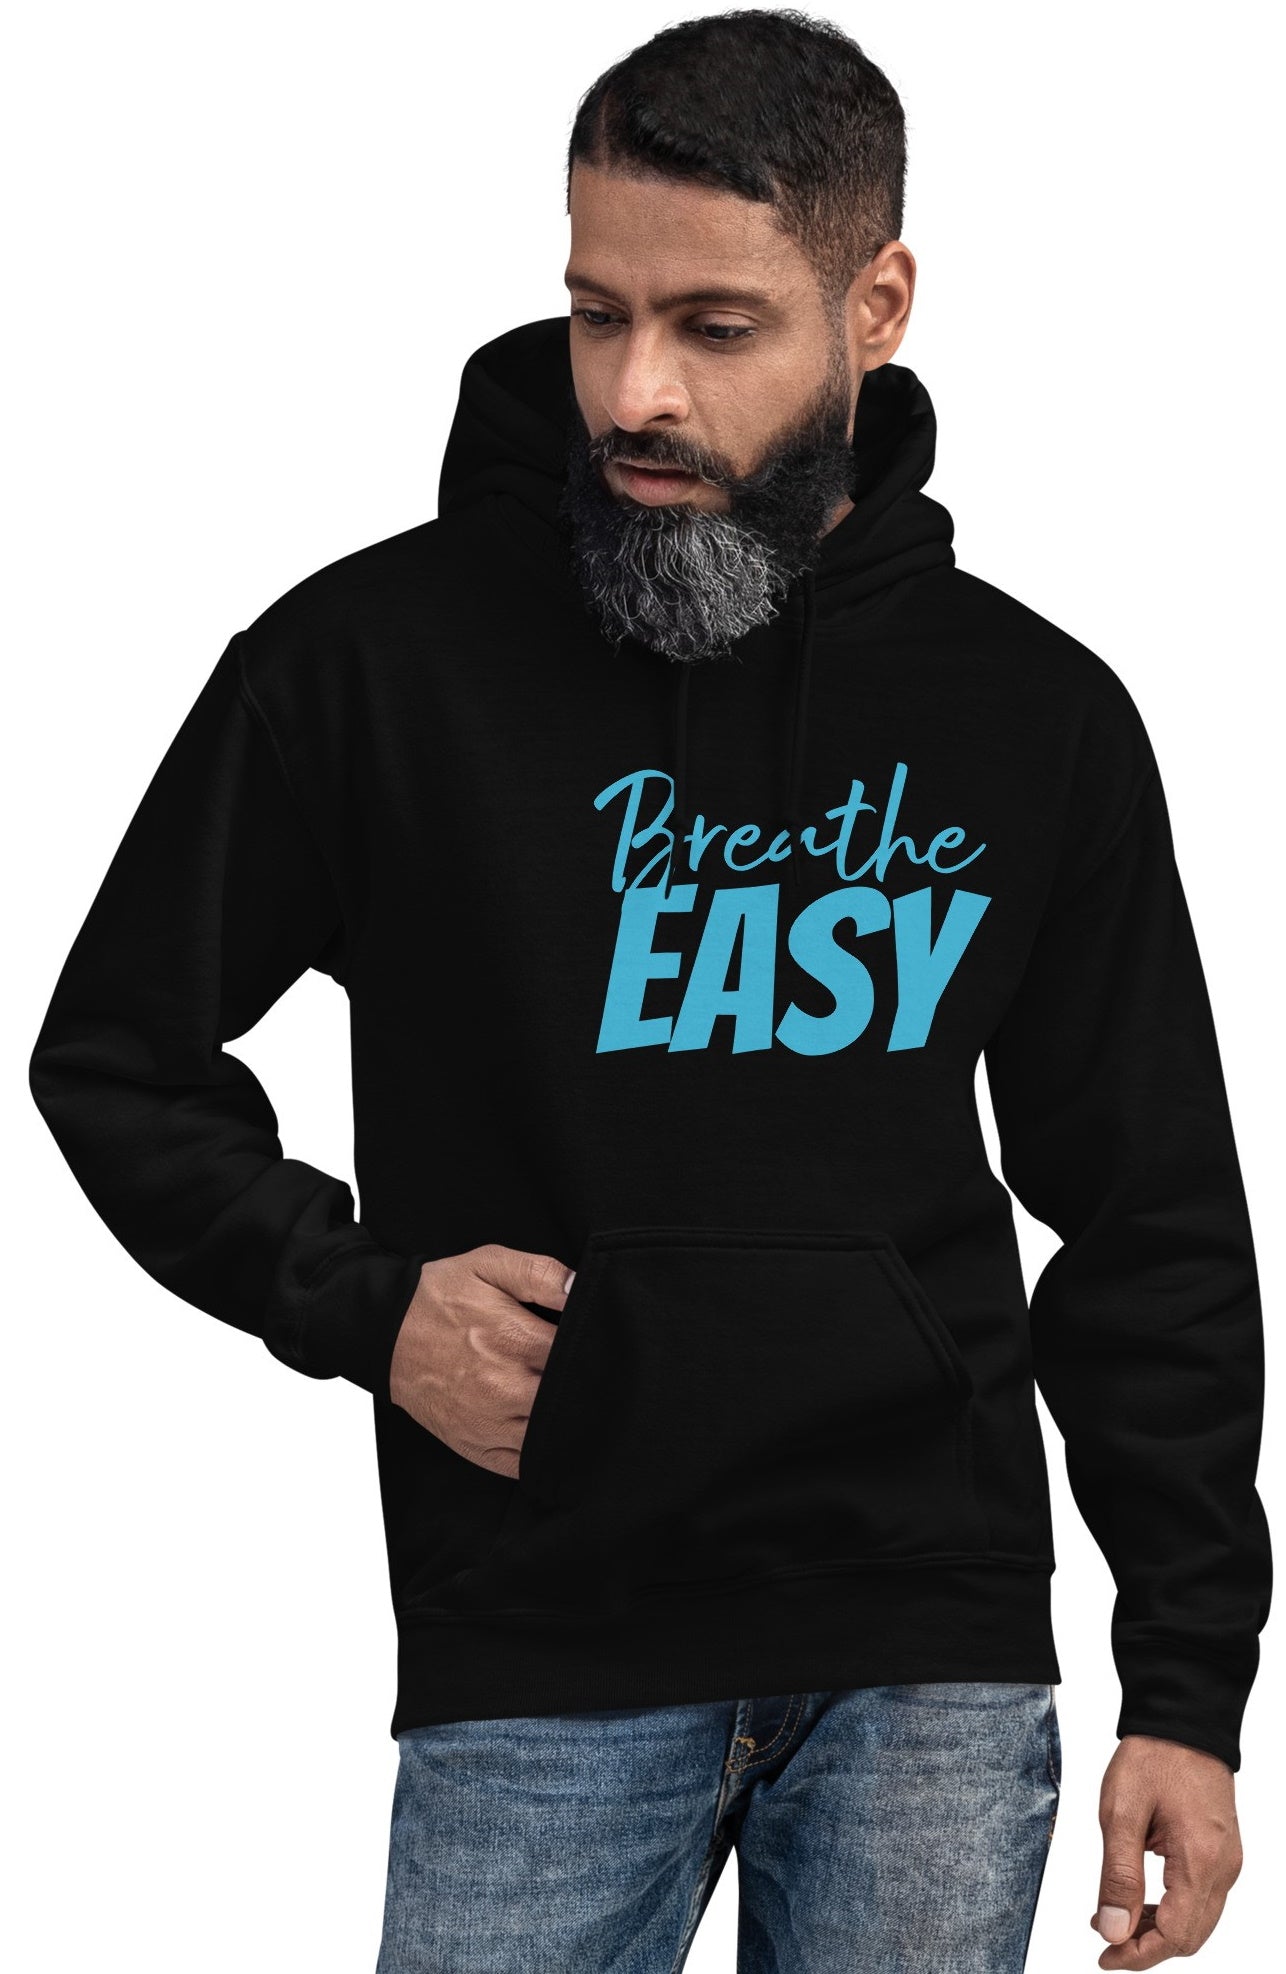 Breathe EASY Stress LESS Unisex Hoodie